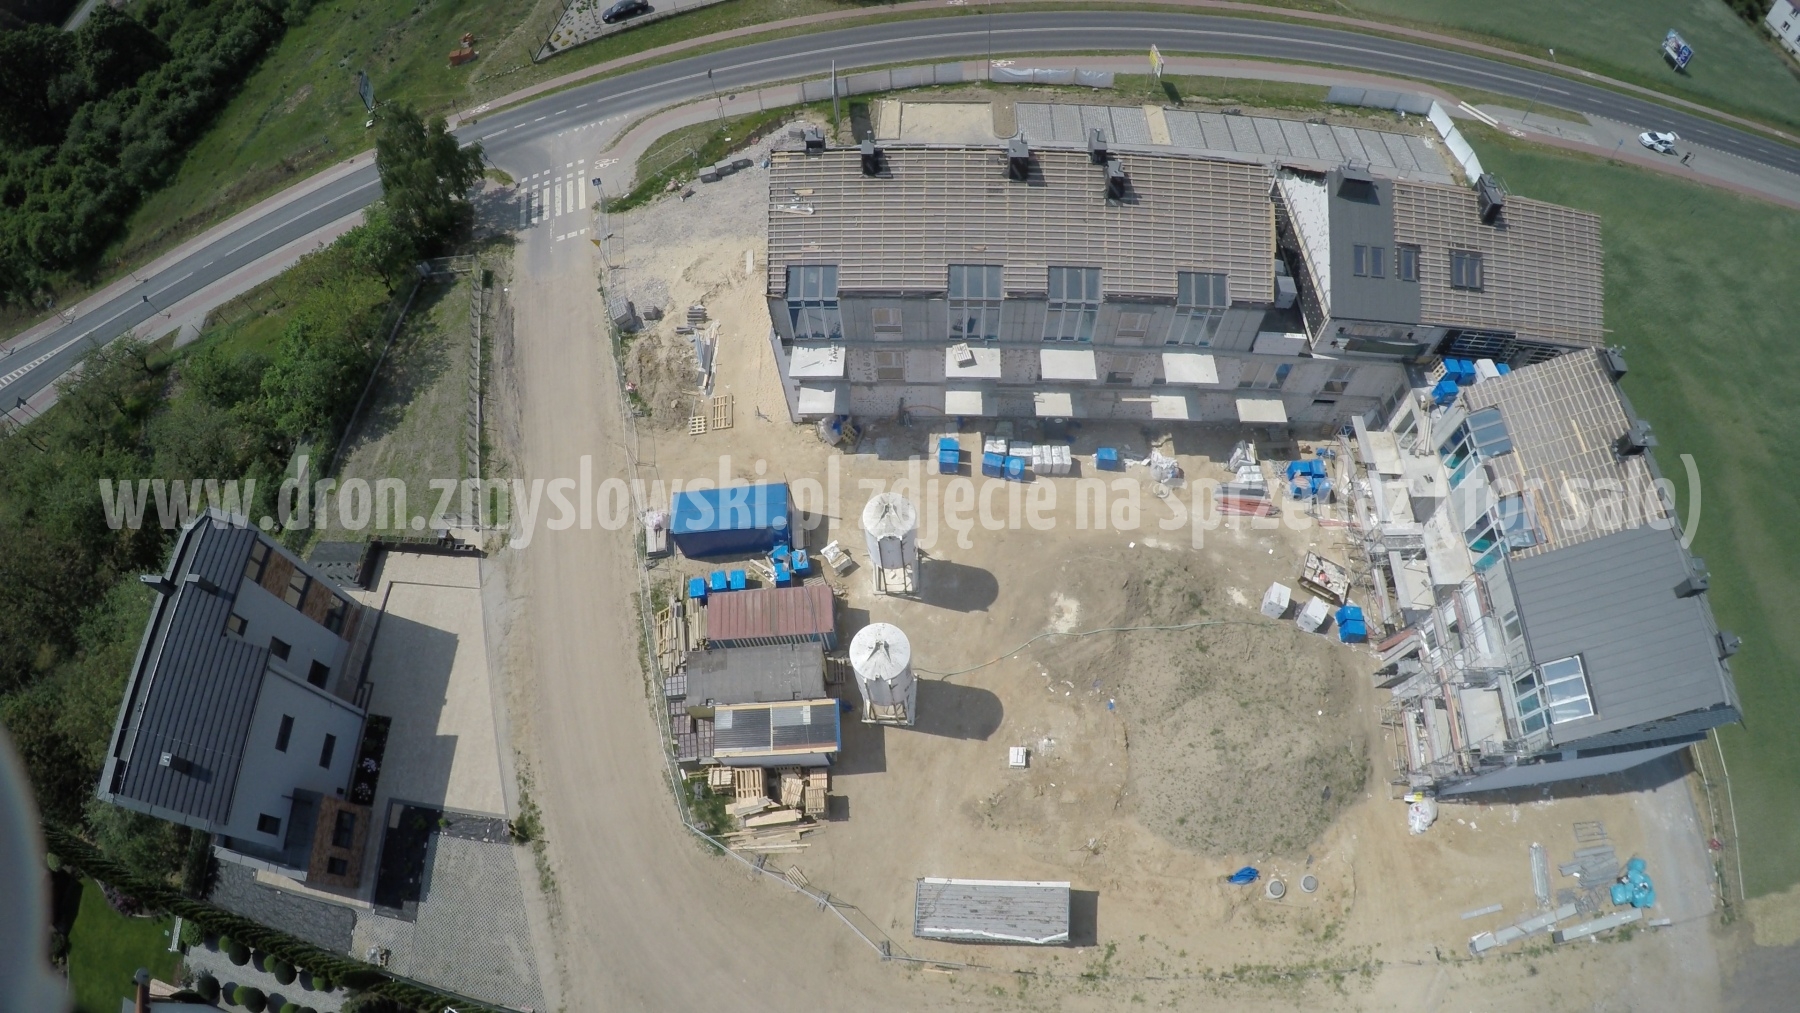 2016-05-22-lot-dronem-nad-Arkadia-3-w-Niemczu-010